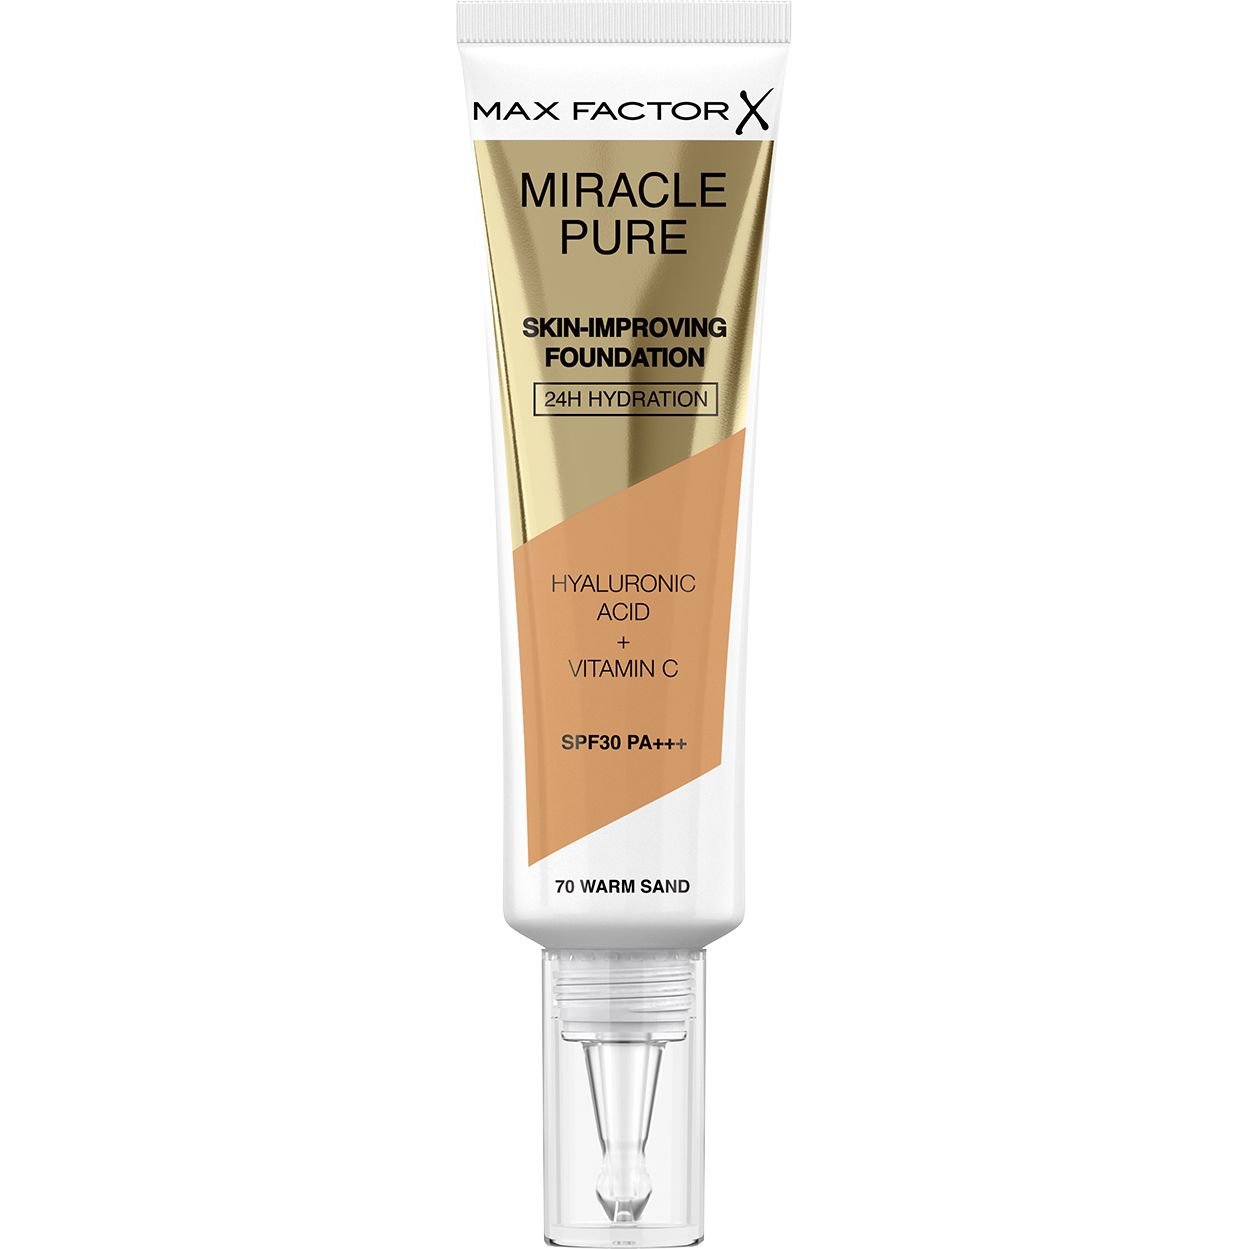 Тональная основа Max Factor Miracle Pure Skin-Improving Foundation SPF30 тон 070 (Warm sand) 30 мл - фото 1